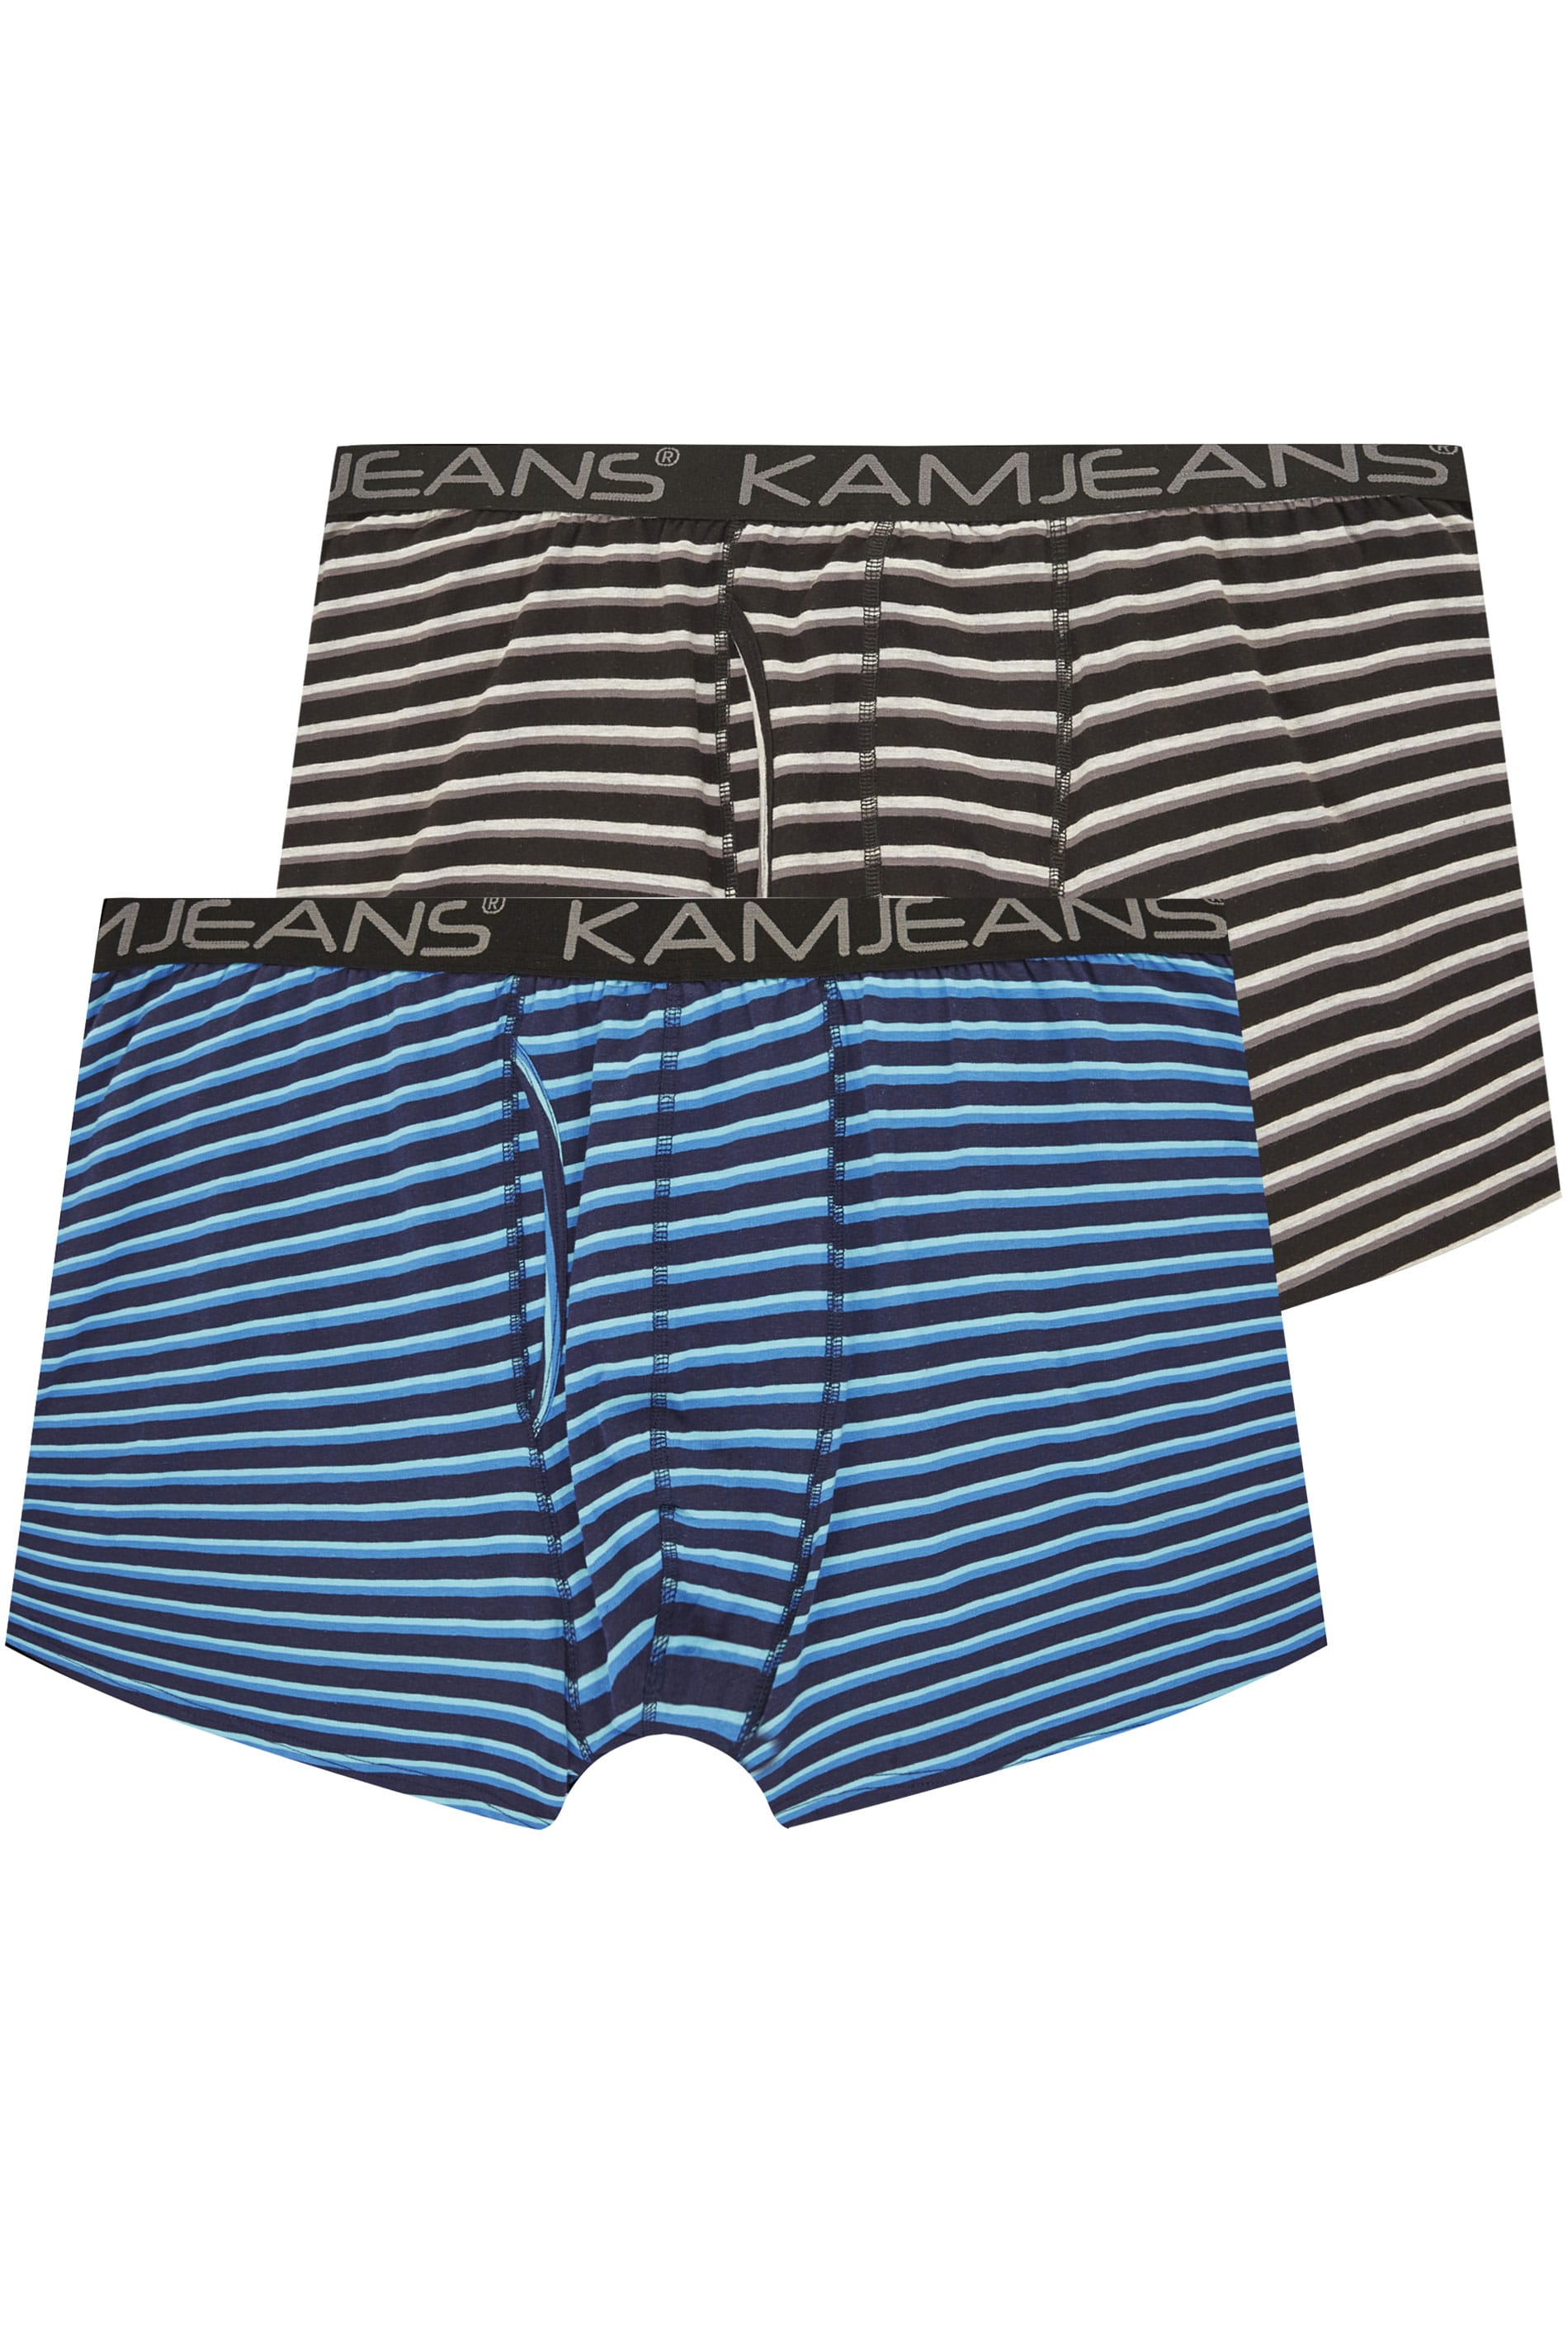 KAM Big & Tall 2 PACK Black & Blue Striped Jersey Boxers_6234.jpg